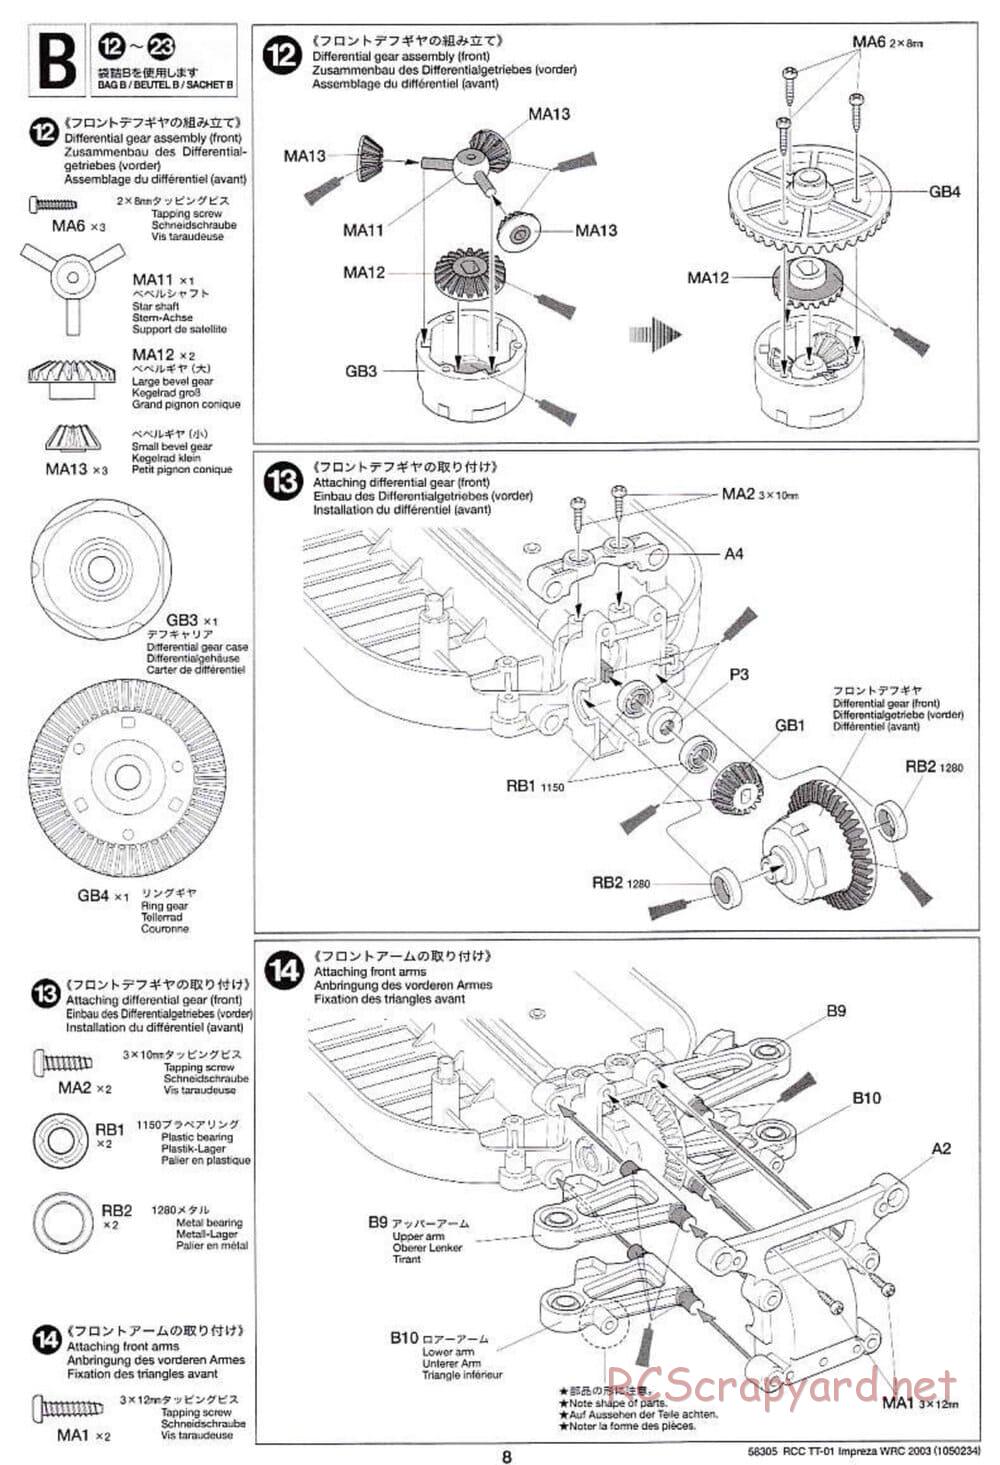 Tamiya - Subaru Impreza WRC 2003 - TT-01 Chassis - Manual - Page 8